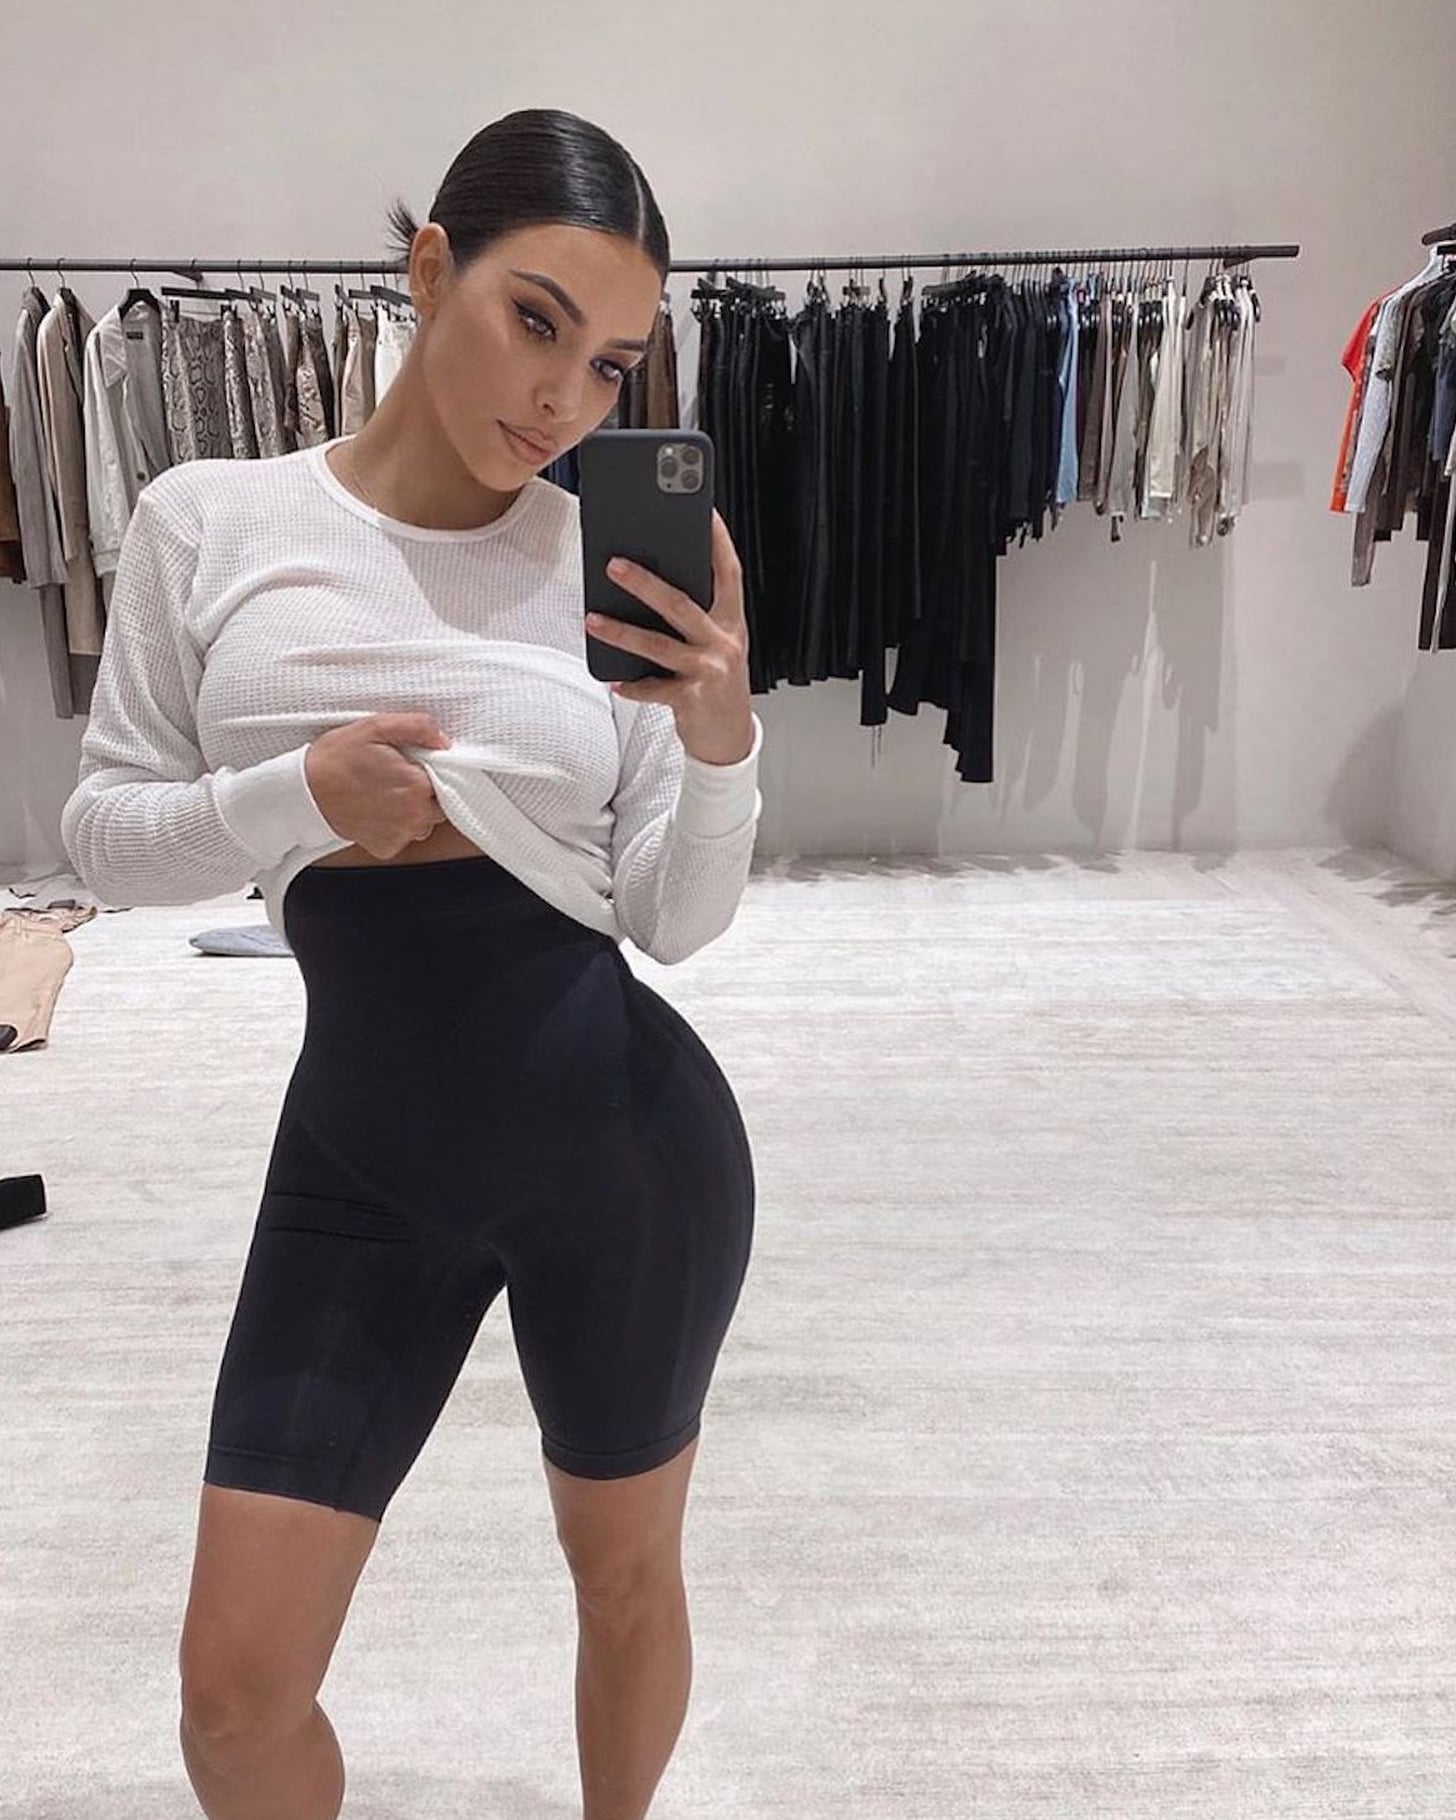 Kim Kardashian Wears Spandex Shorts From SKIMs In Sexy New Pic